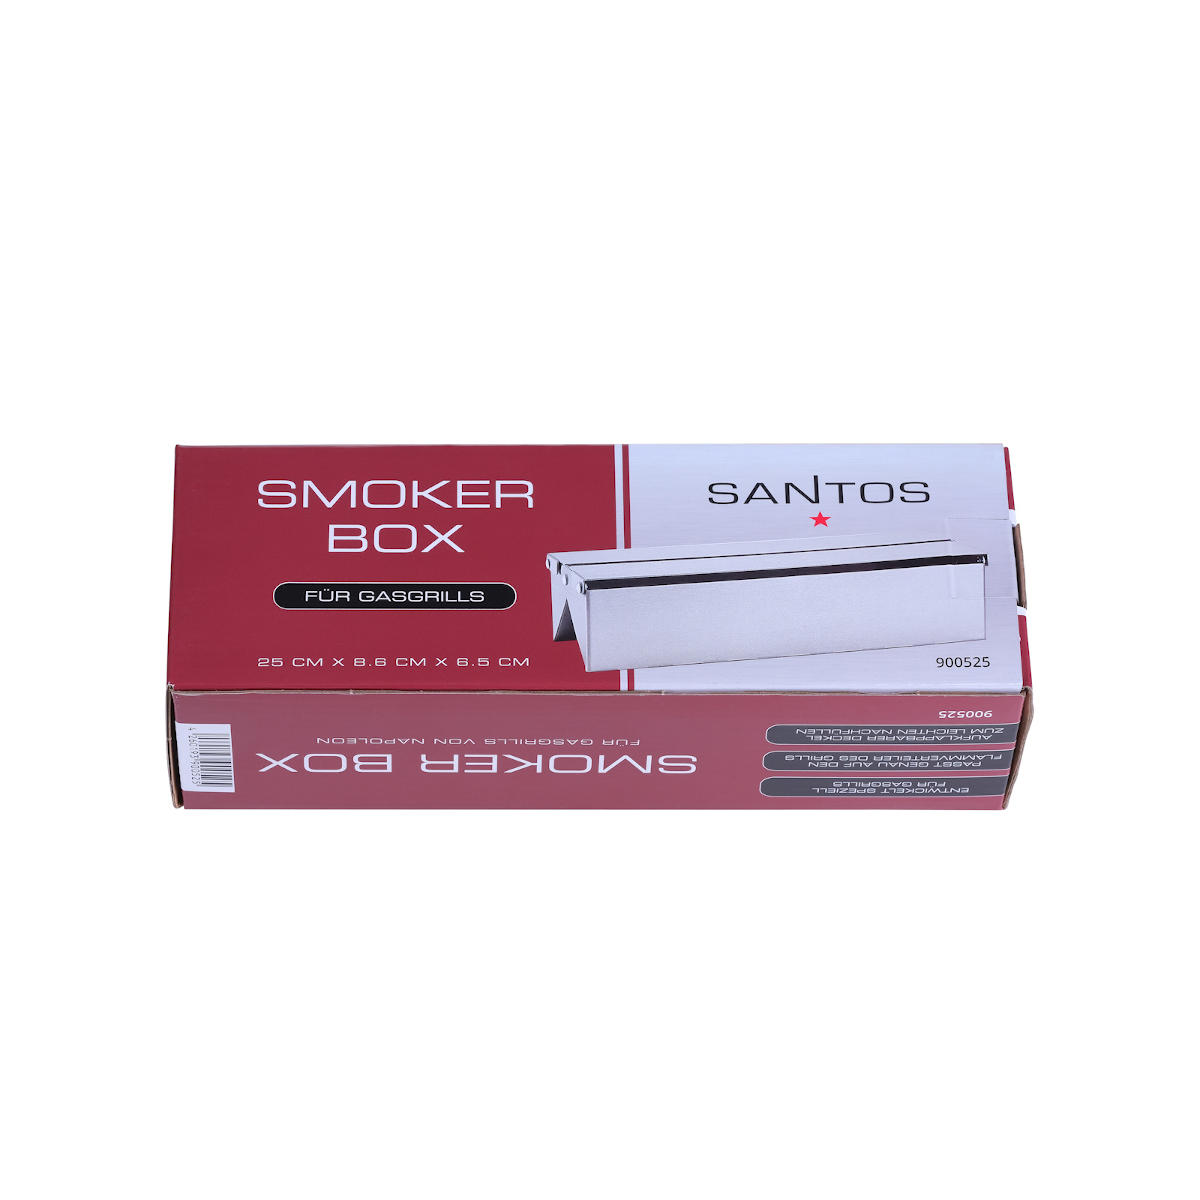 SANTOS Smoker Box für Gasgrills Verpackung